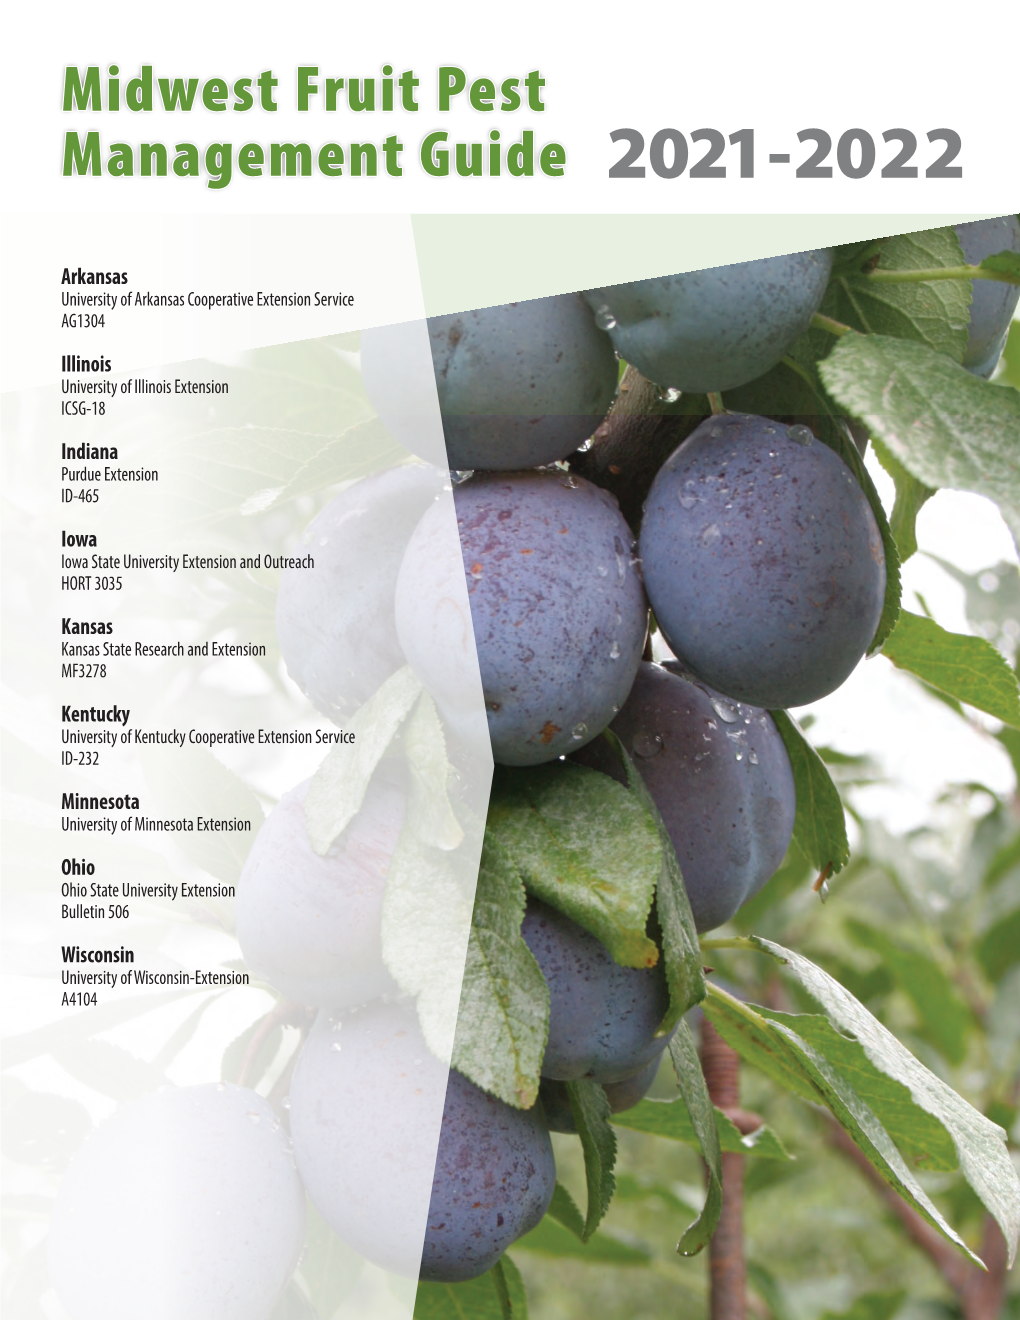 Midwest Fruit Pest Management Guide 2021 - 2022